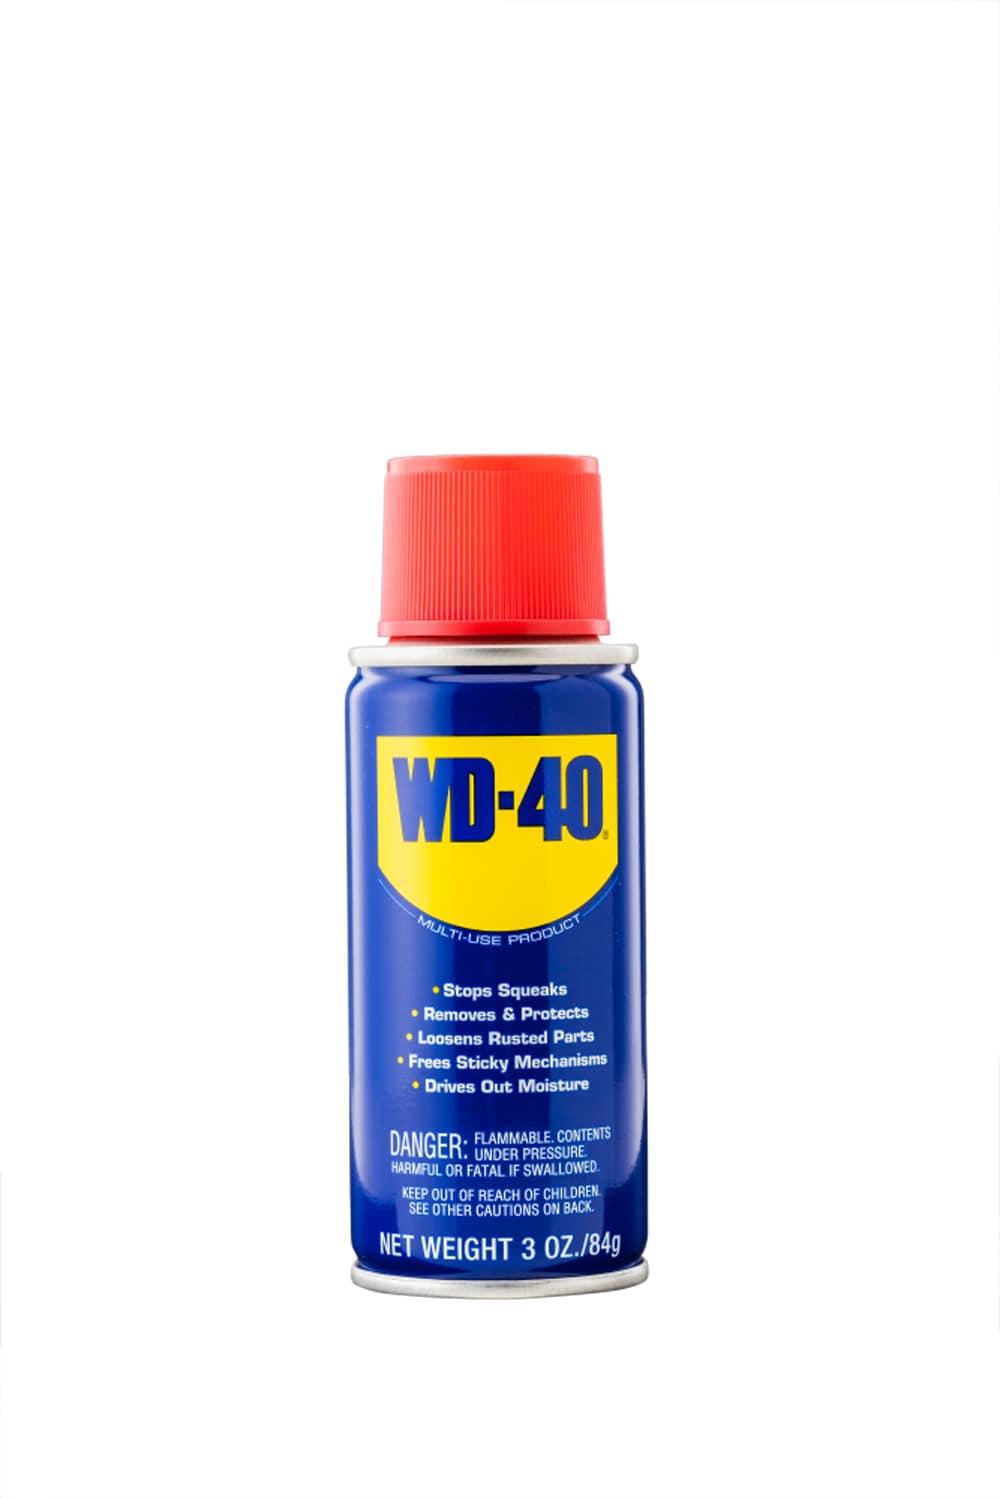 WD-40 Original WD-40 Formula, Multi-Purpose 3-oz Lubricant Spray, Handy Can